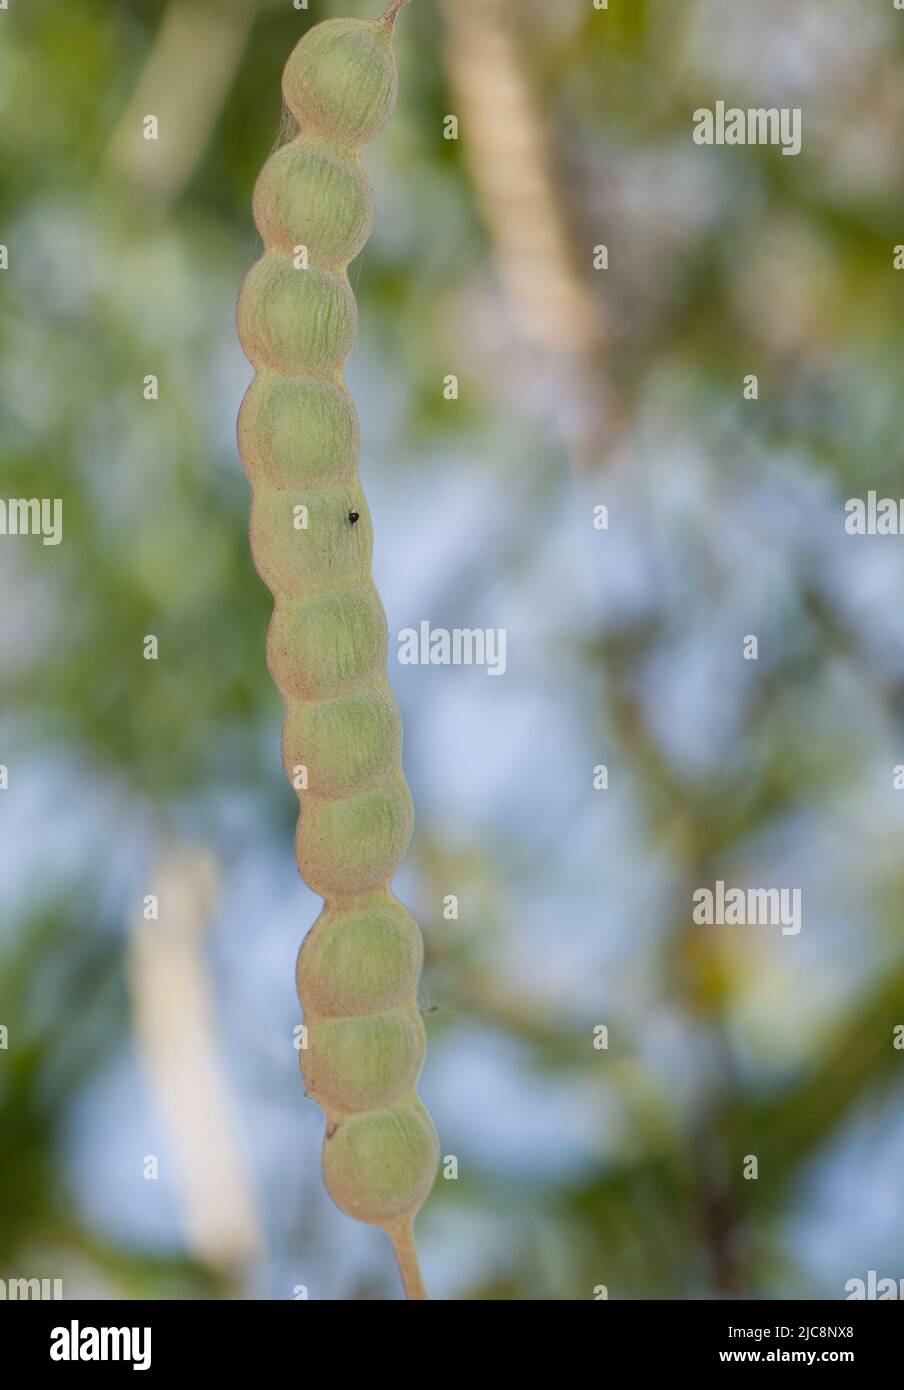 Pod of gum acacia Senegalia senegal. Oiseaux du Djoudj National Park. Saint-Louis. Senegal. Stock Photo